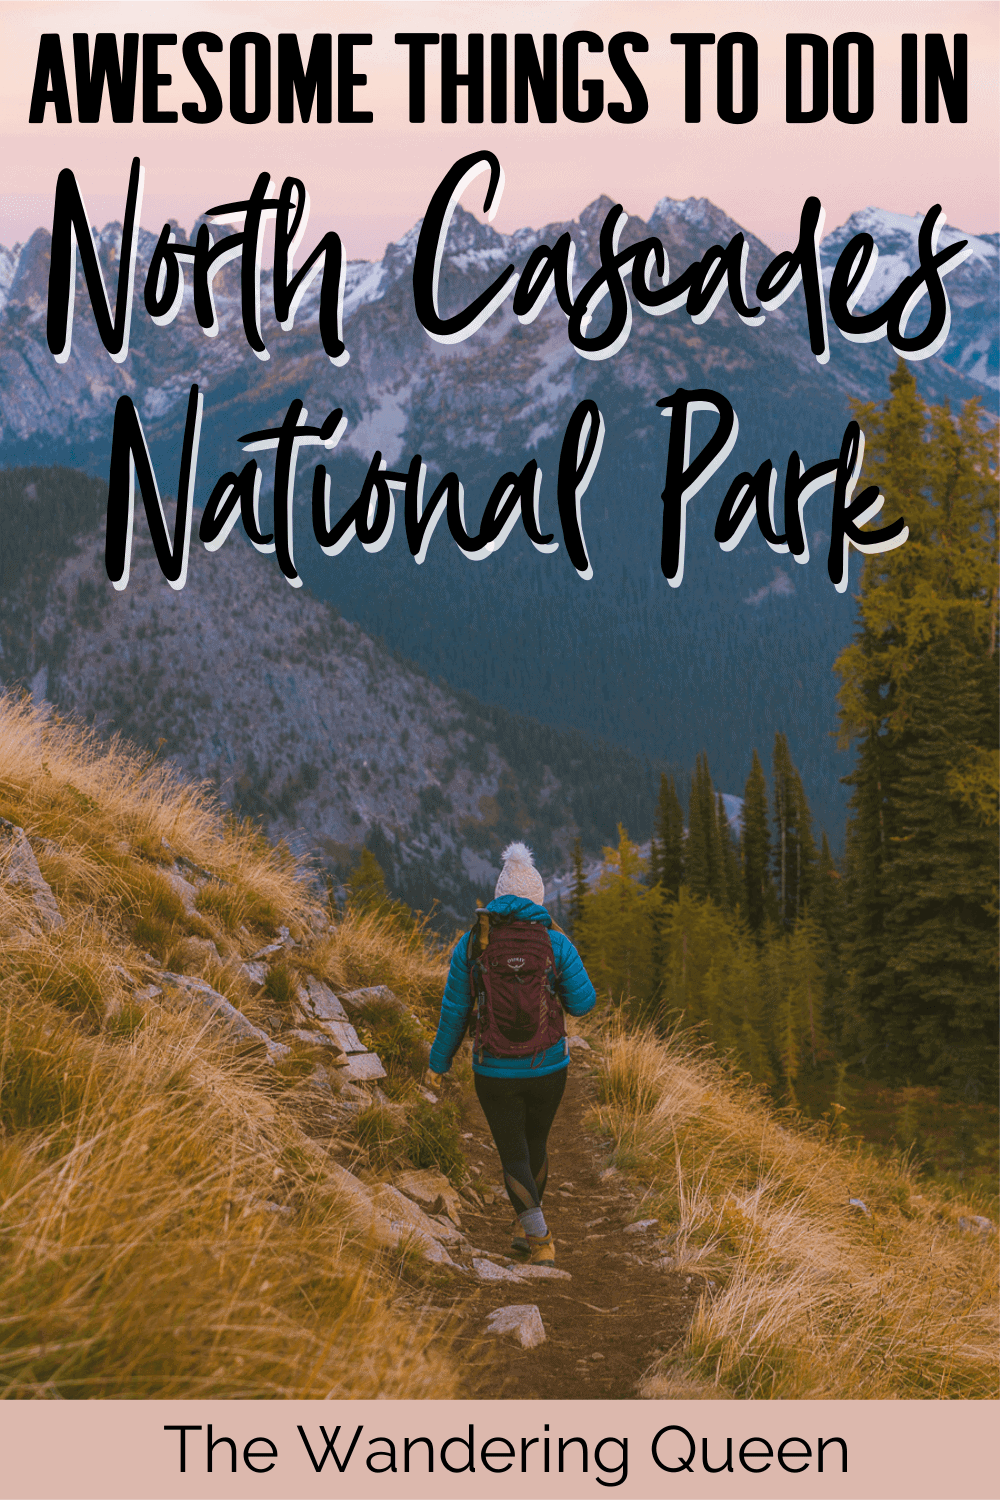 North Cascade Hikes